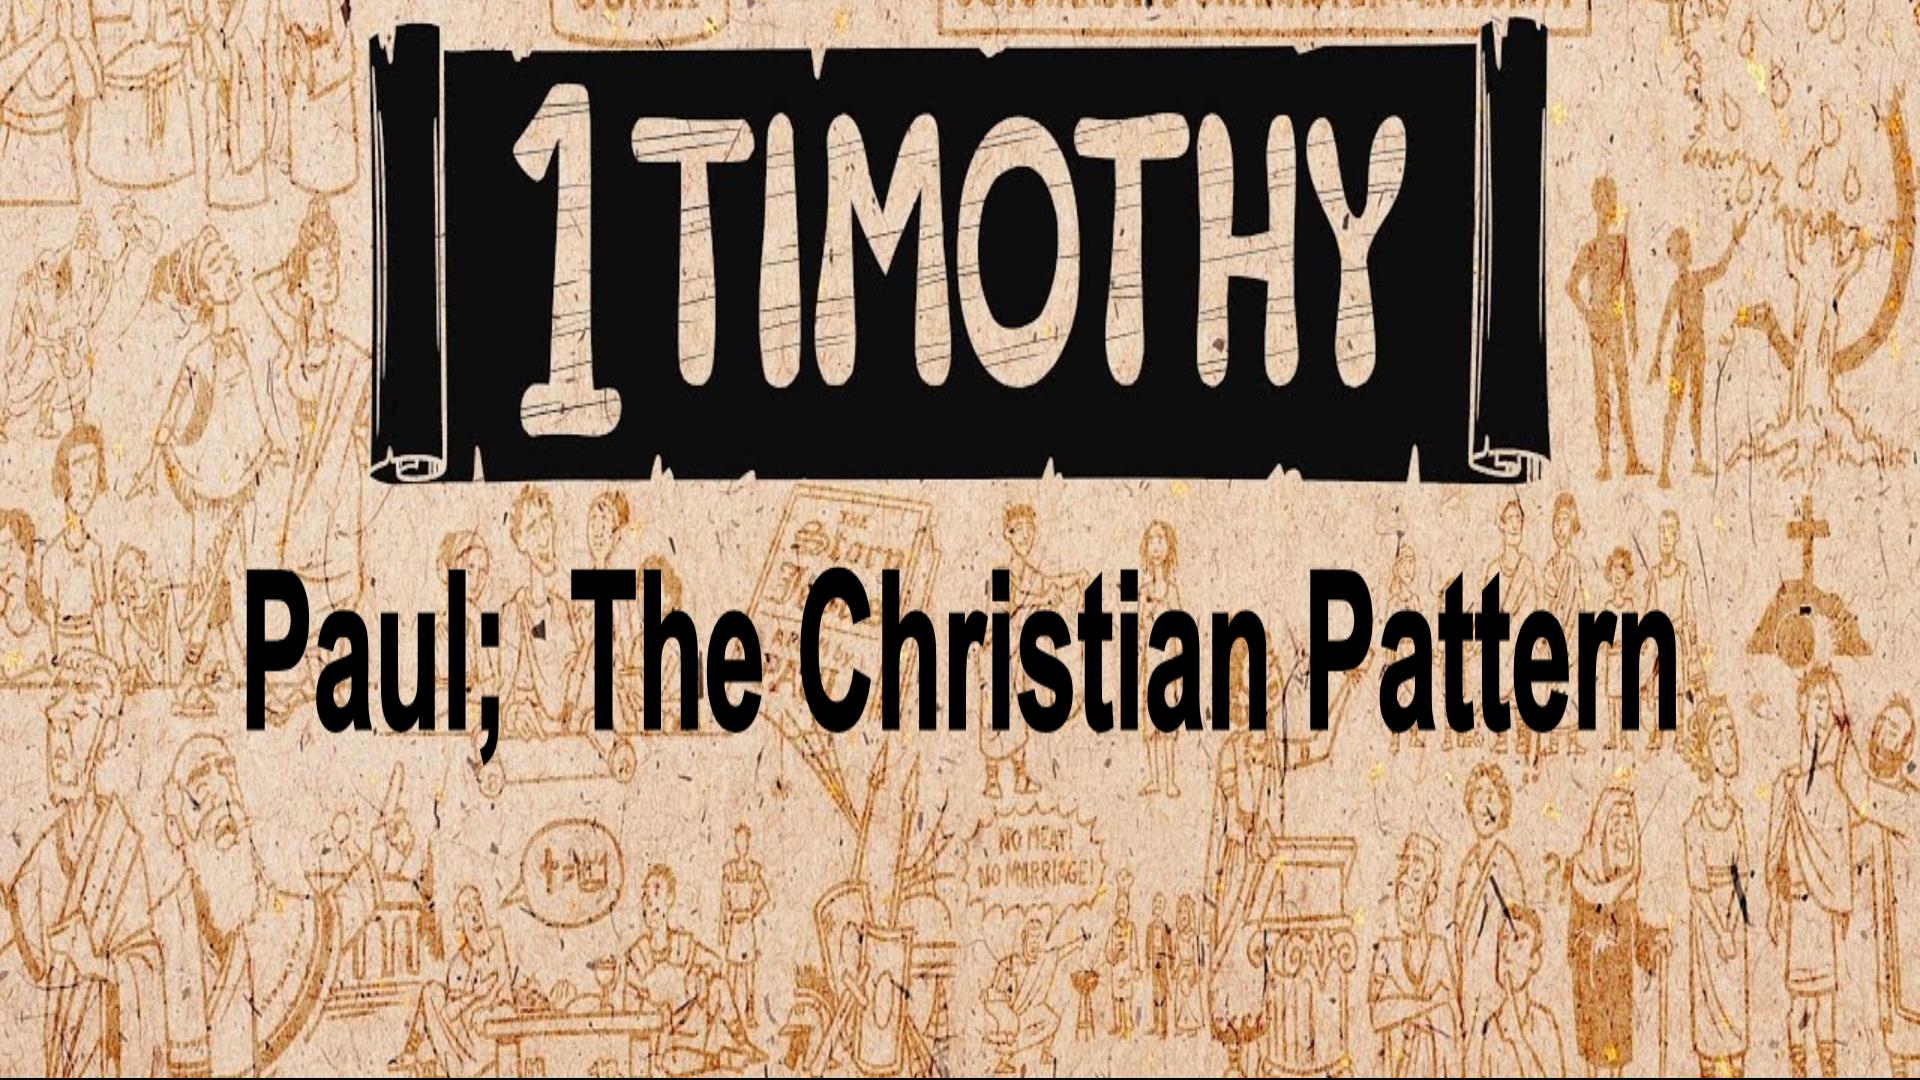 Paul; A Christian Pattern